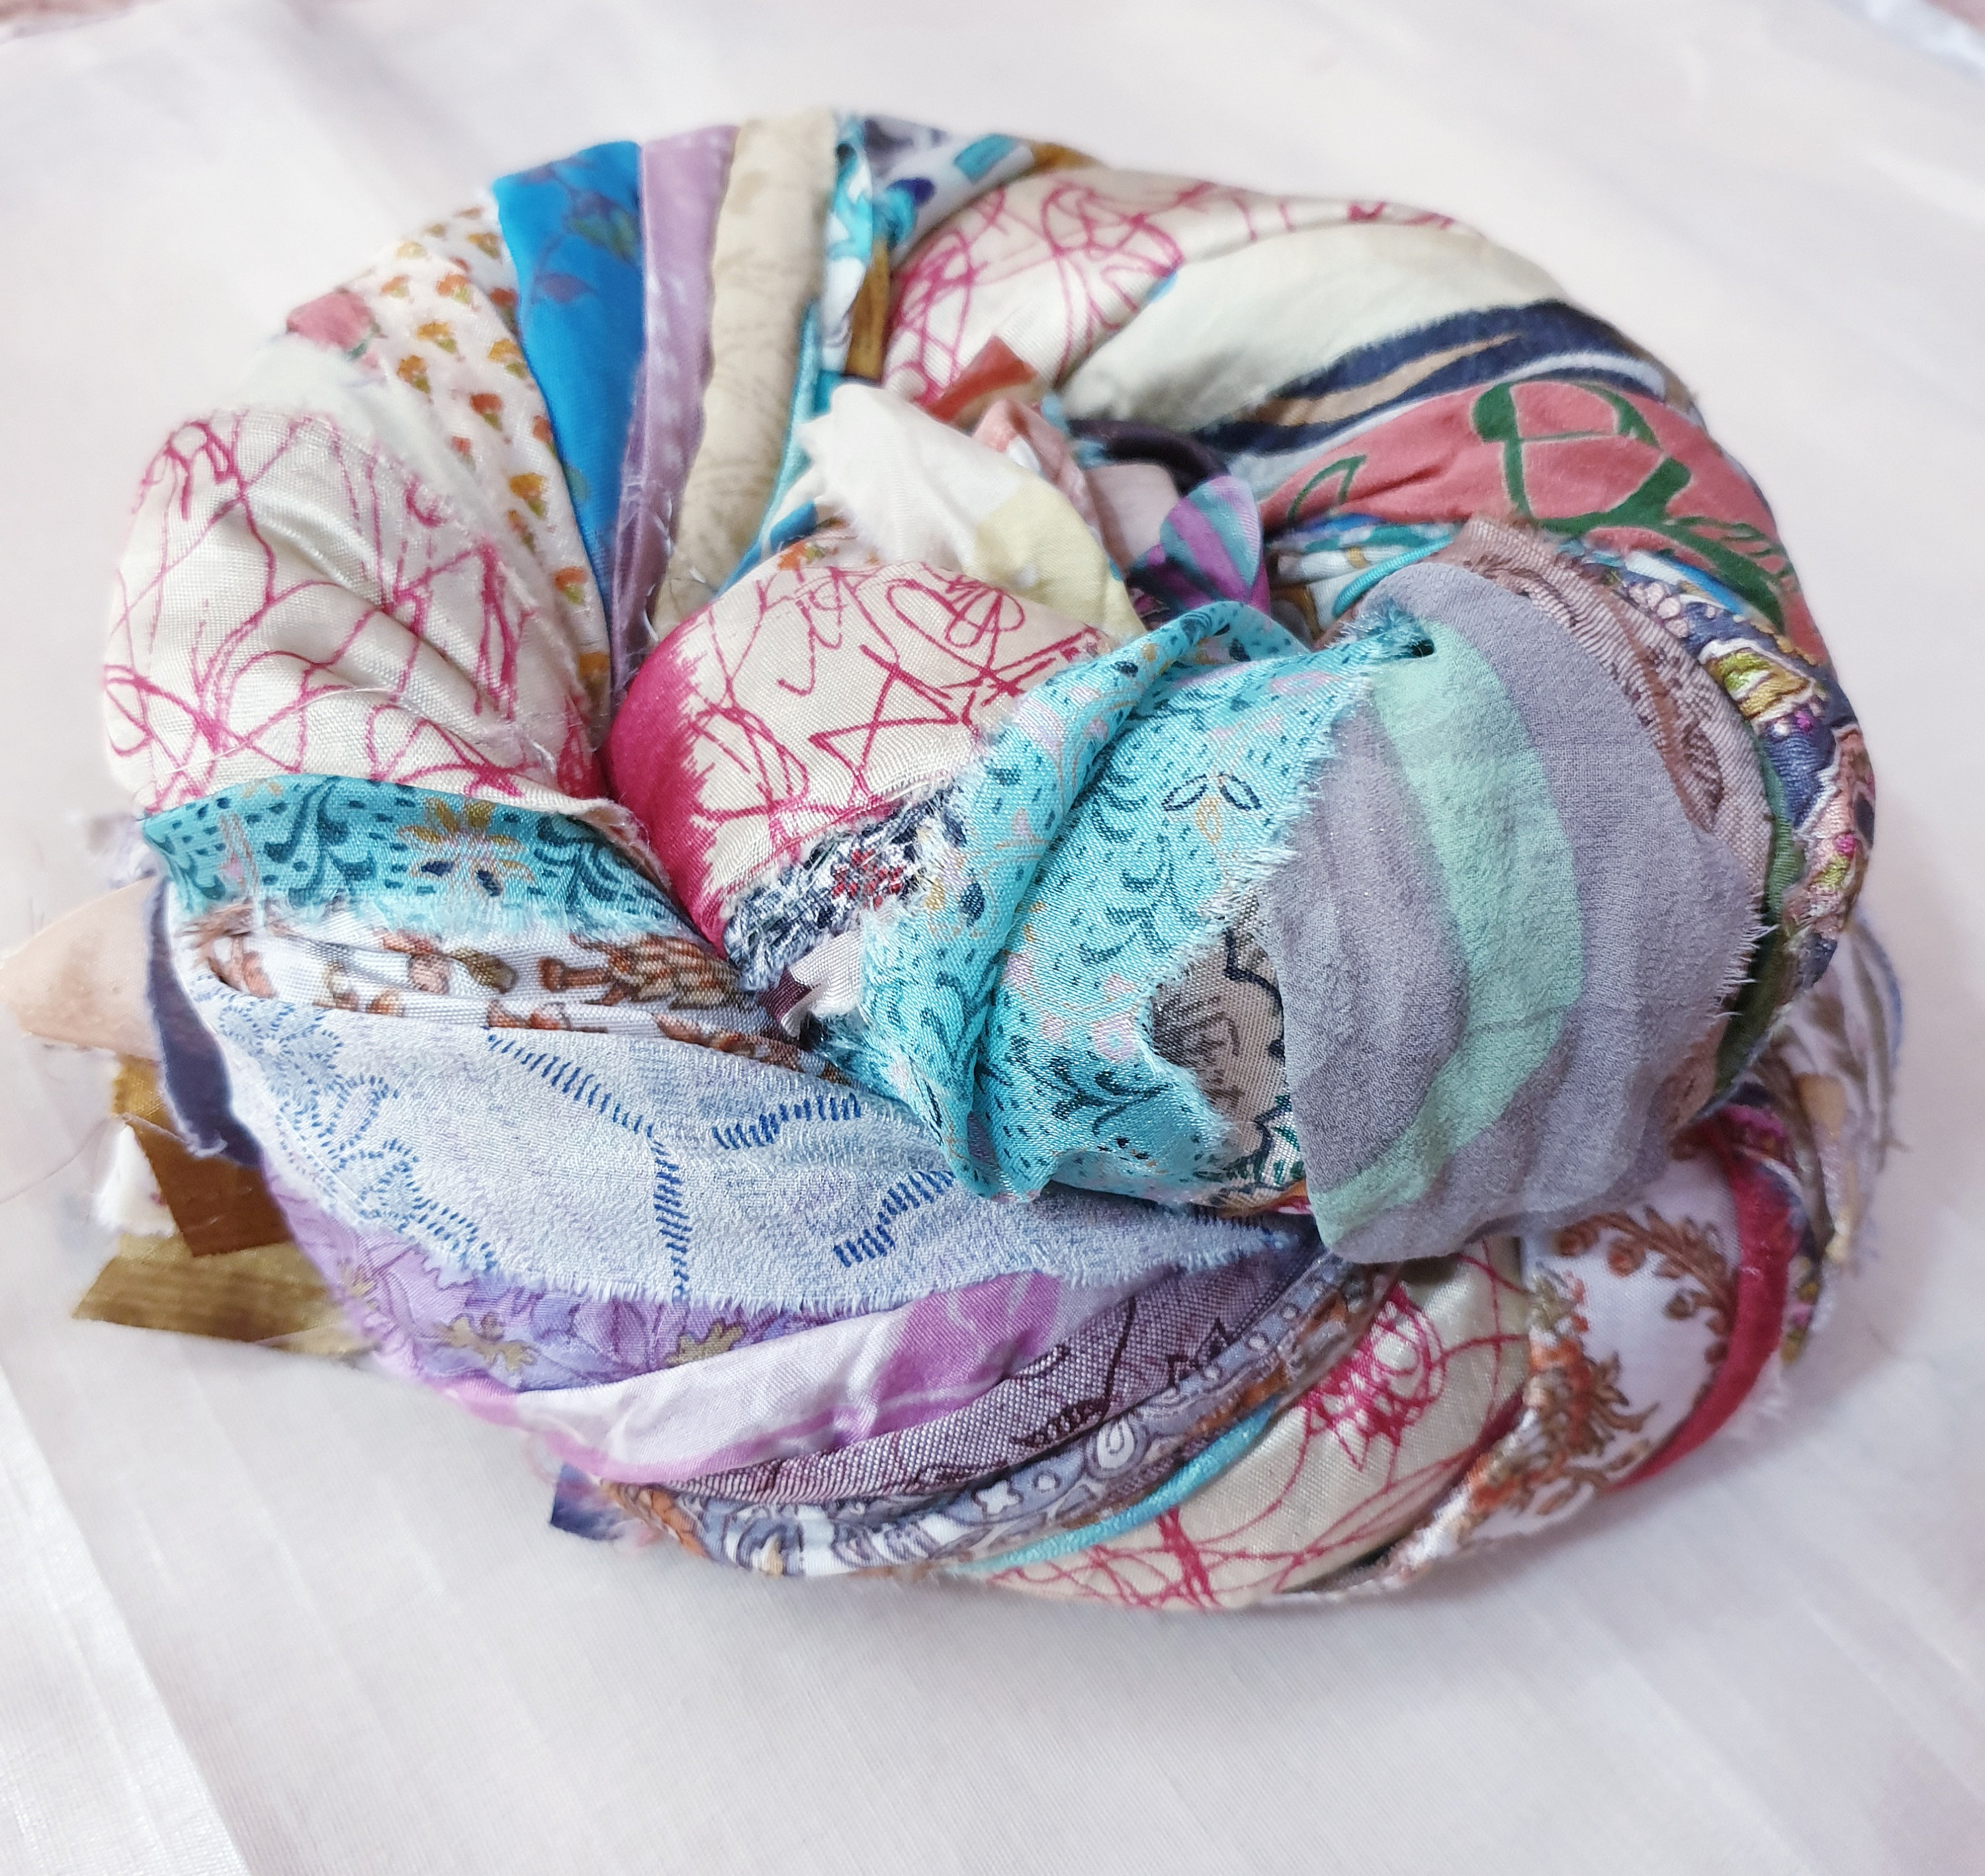 Vintage Fabrics Crafts 42 Yards Unstitched Silk Sari Ribbon Yarn Tassels  SKEINS Mixed Shades Journal Scrapbook Craft Project Decor Strips India lot